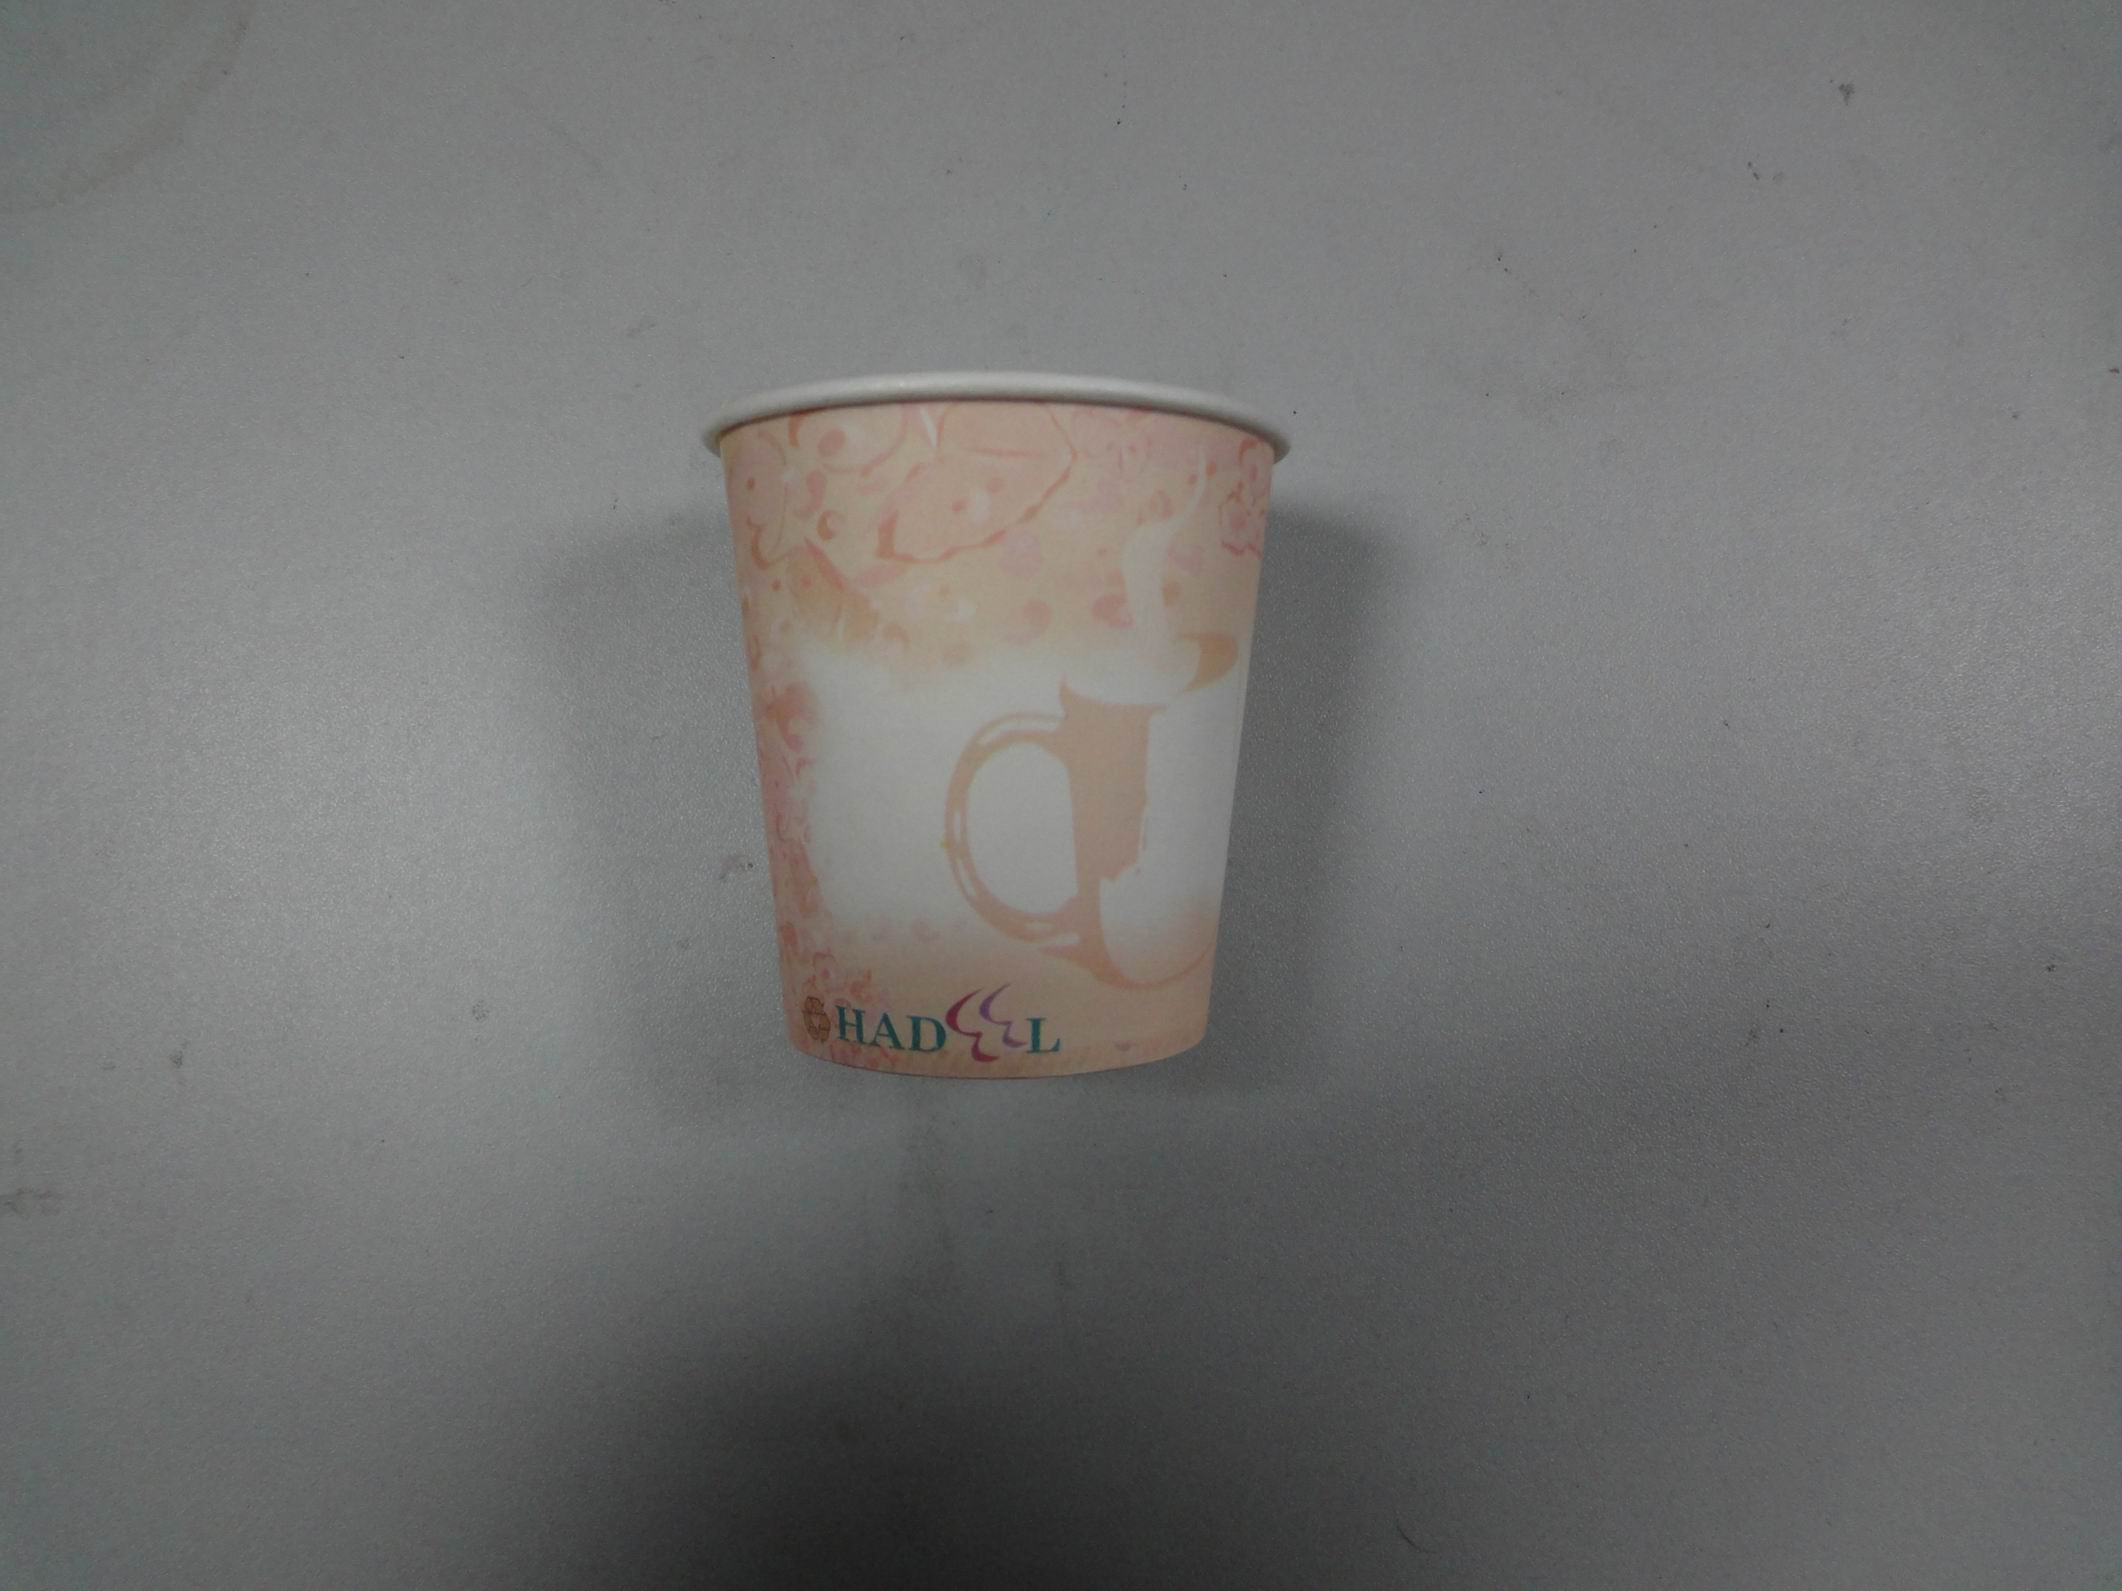 general drink cup(6oz)